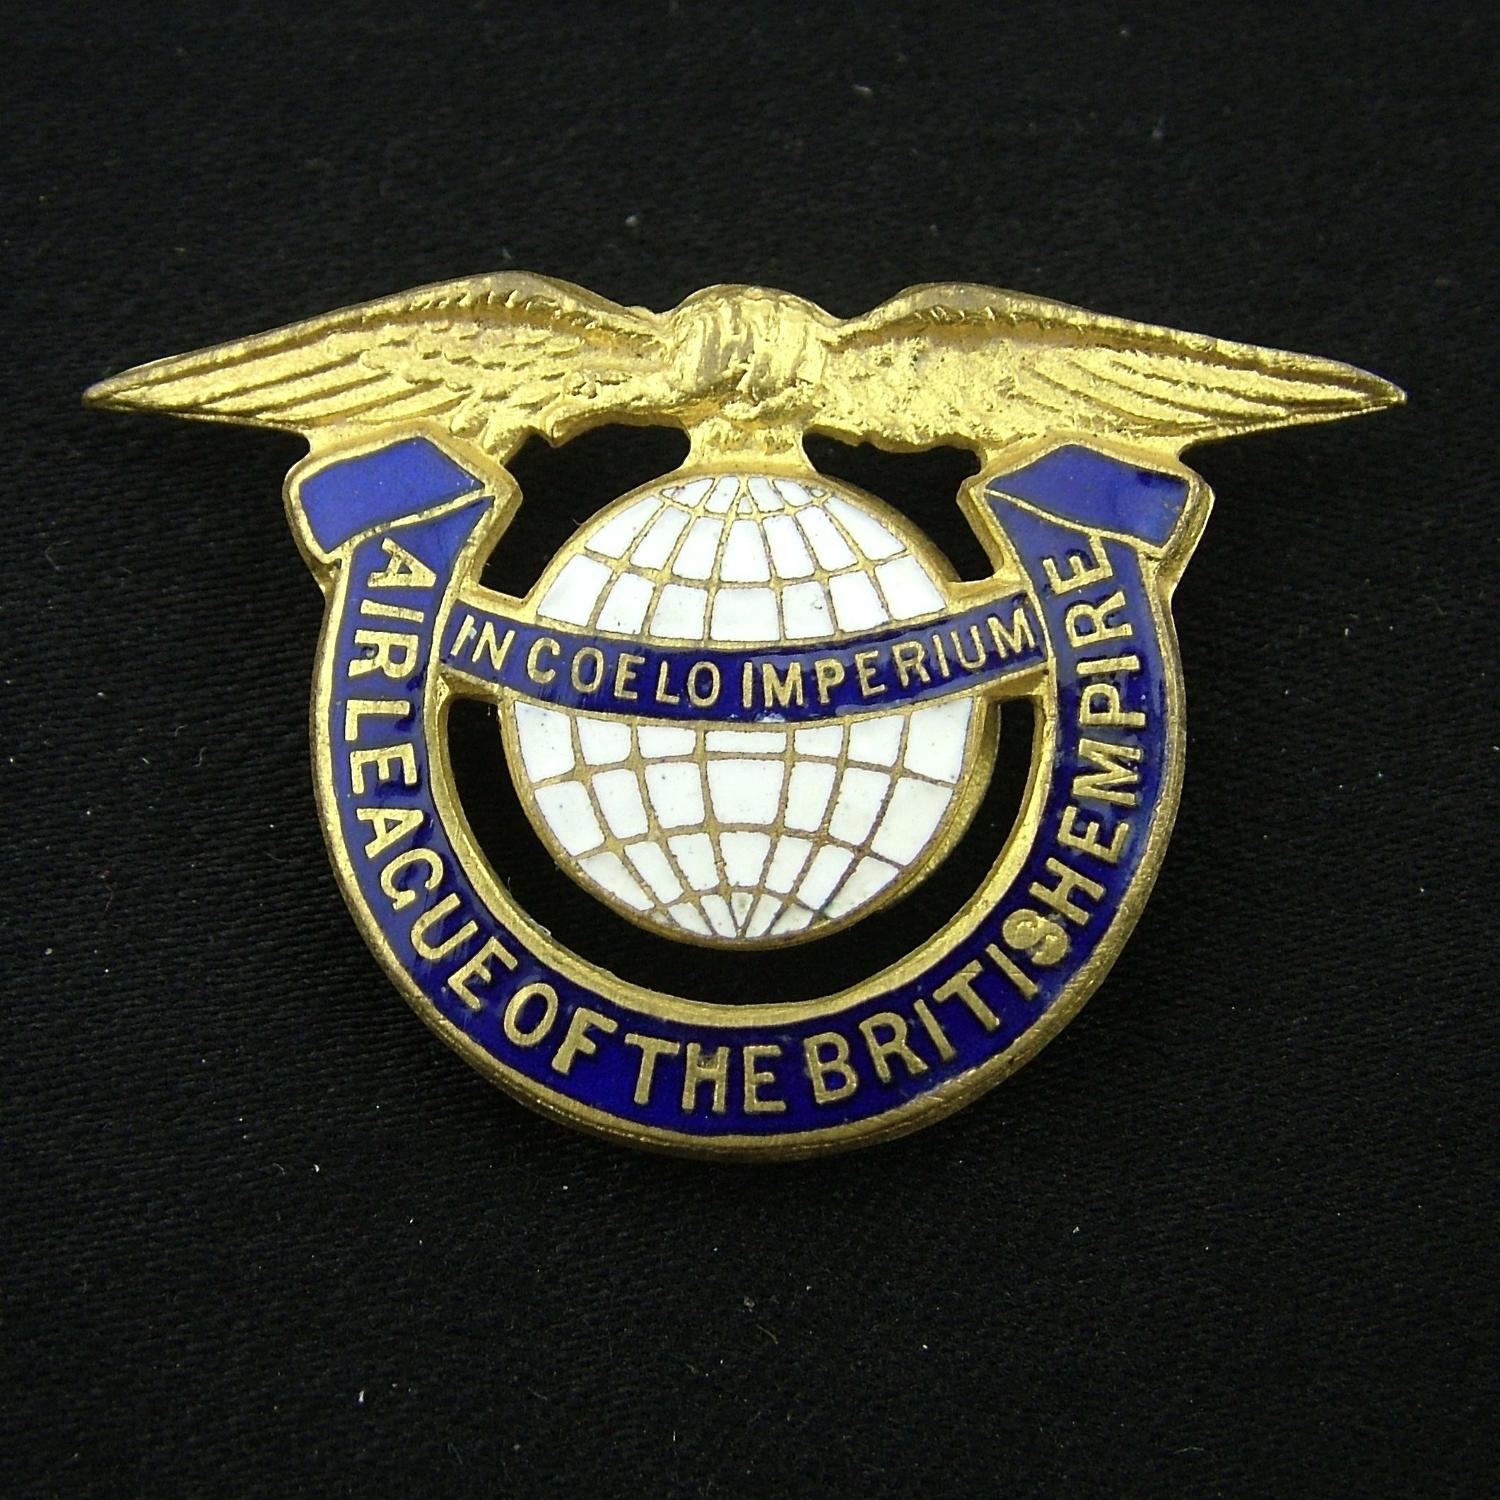 Air League of the British Empire badge